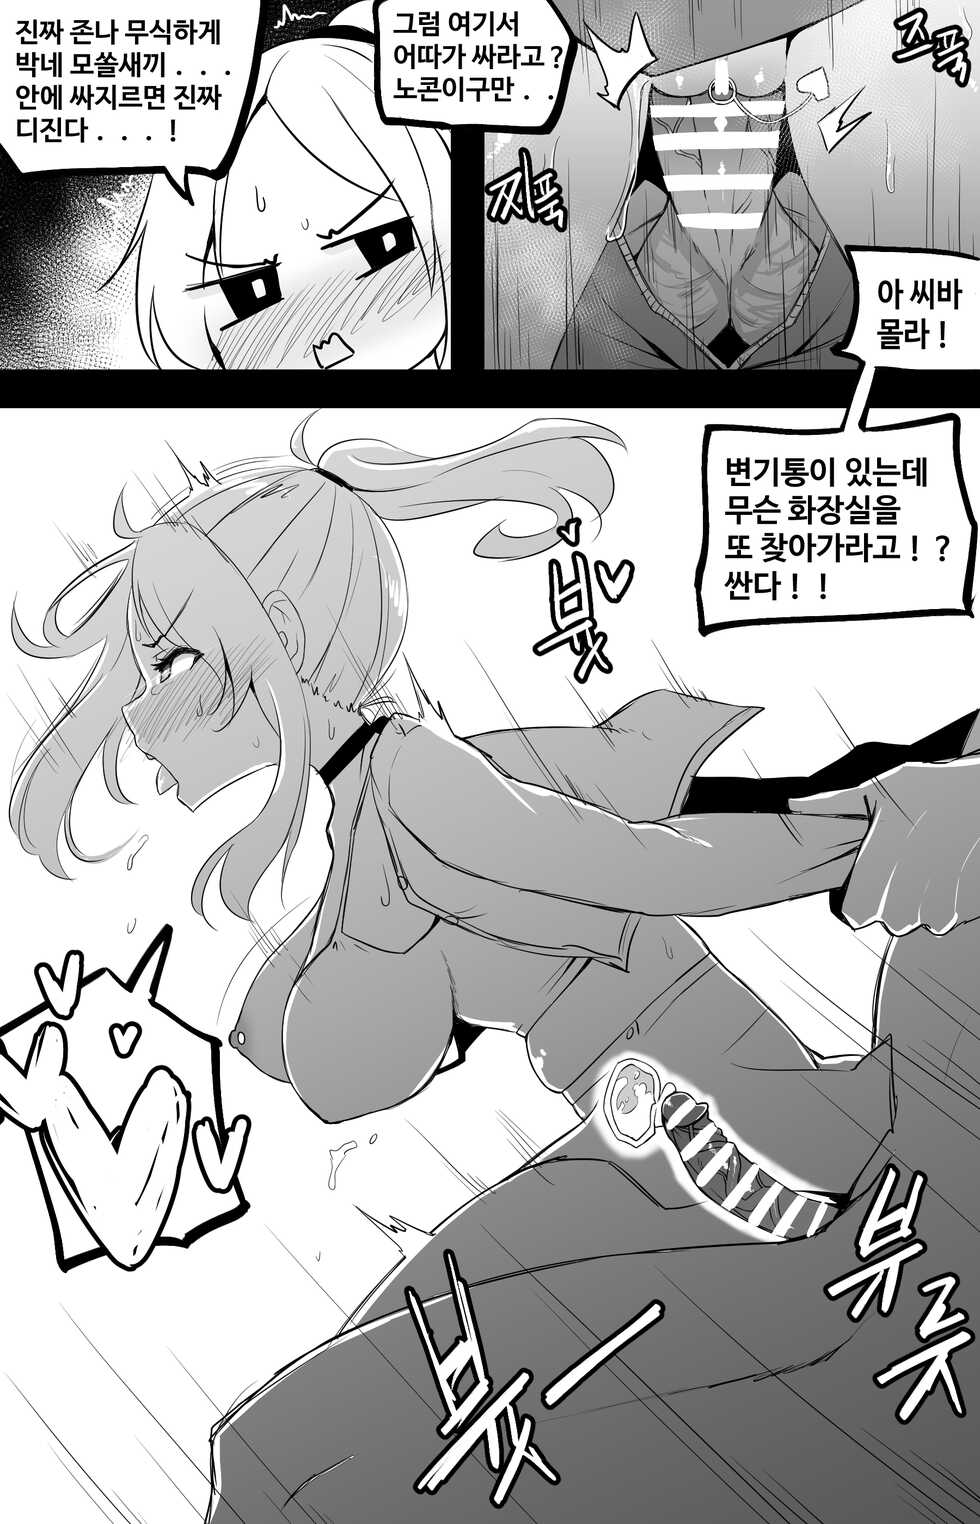 (mangmoongming)세상에서 가장 빠꾸 없는 남여사친(pixiv) - Page 13